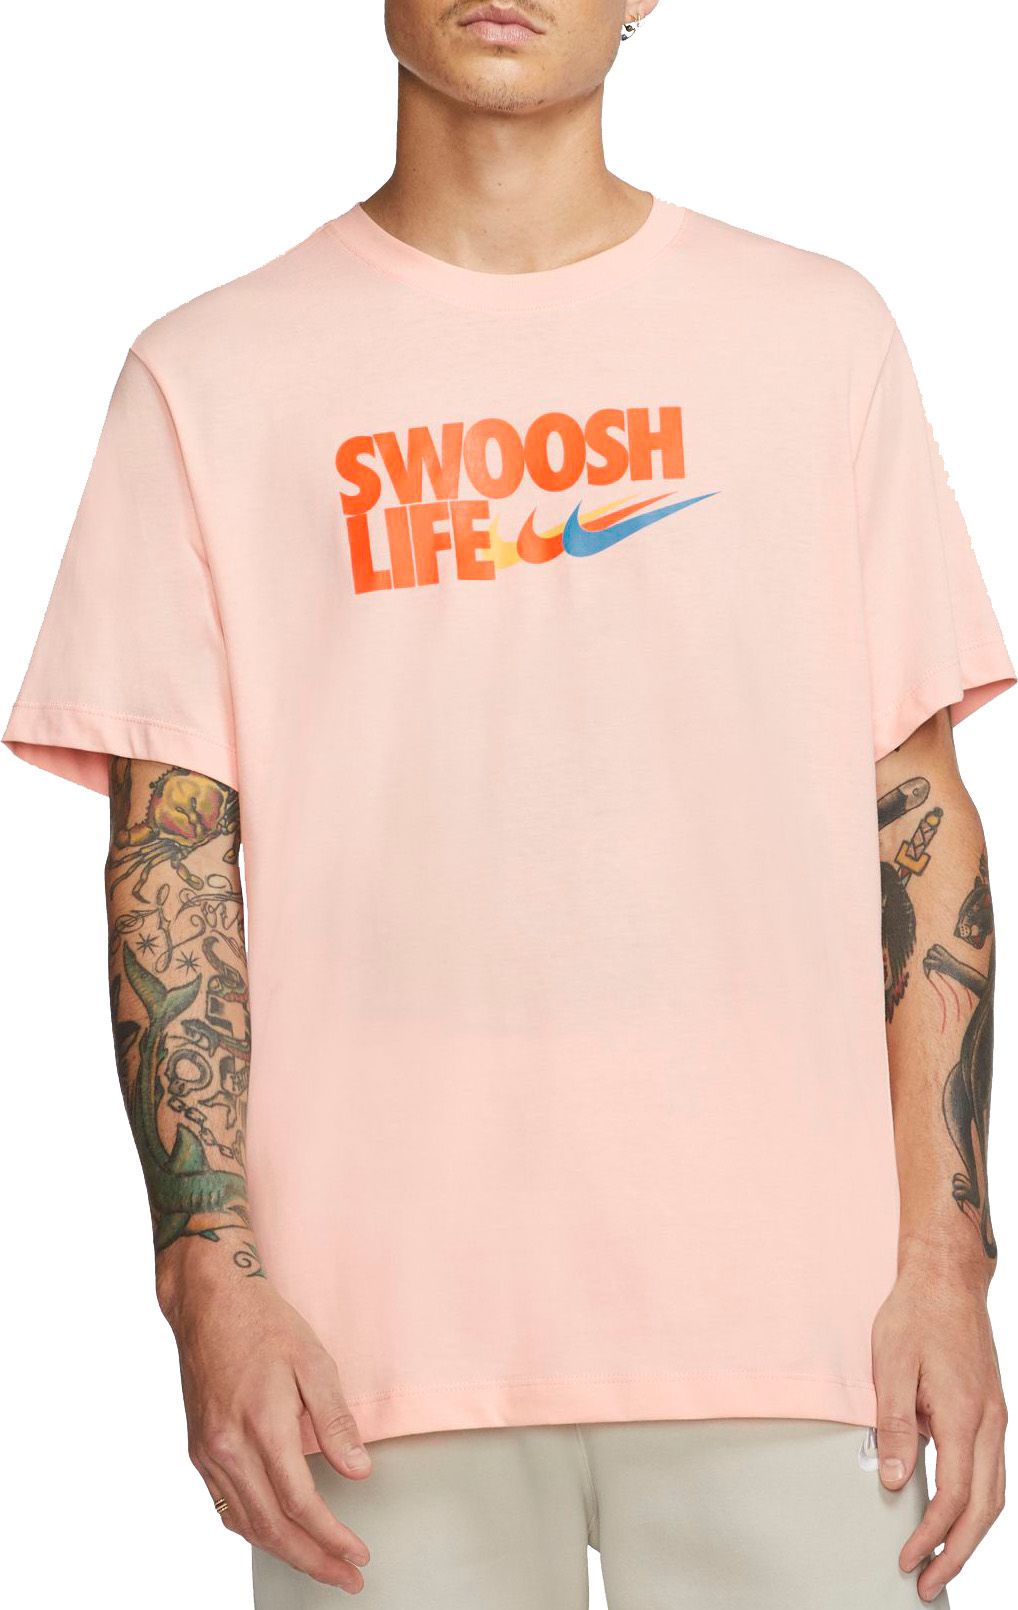 swoosh shirt